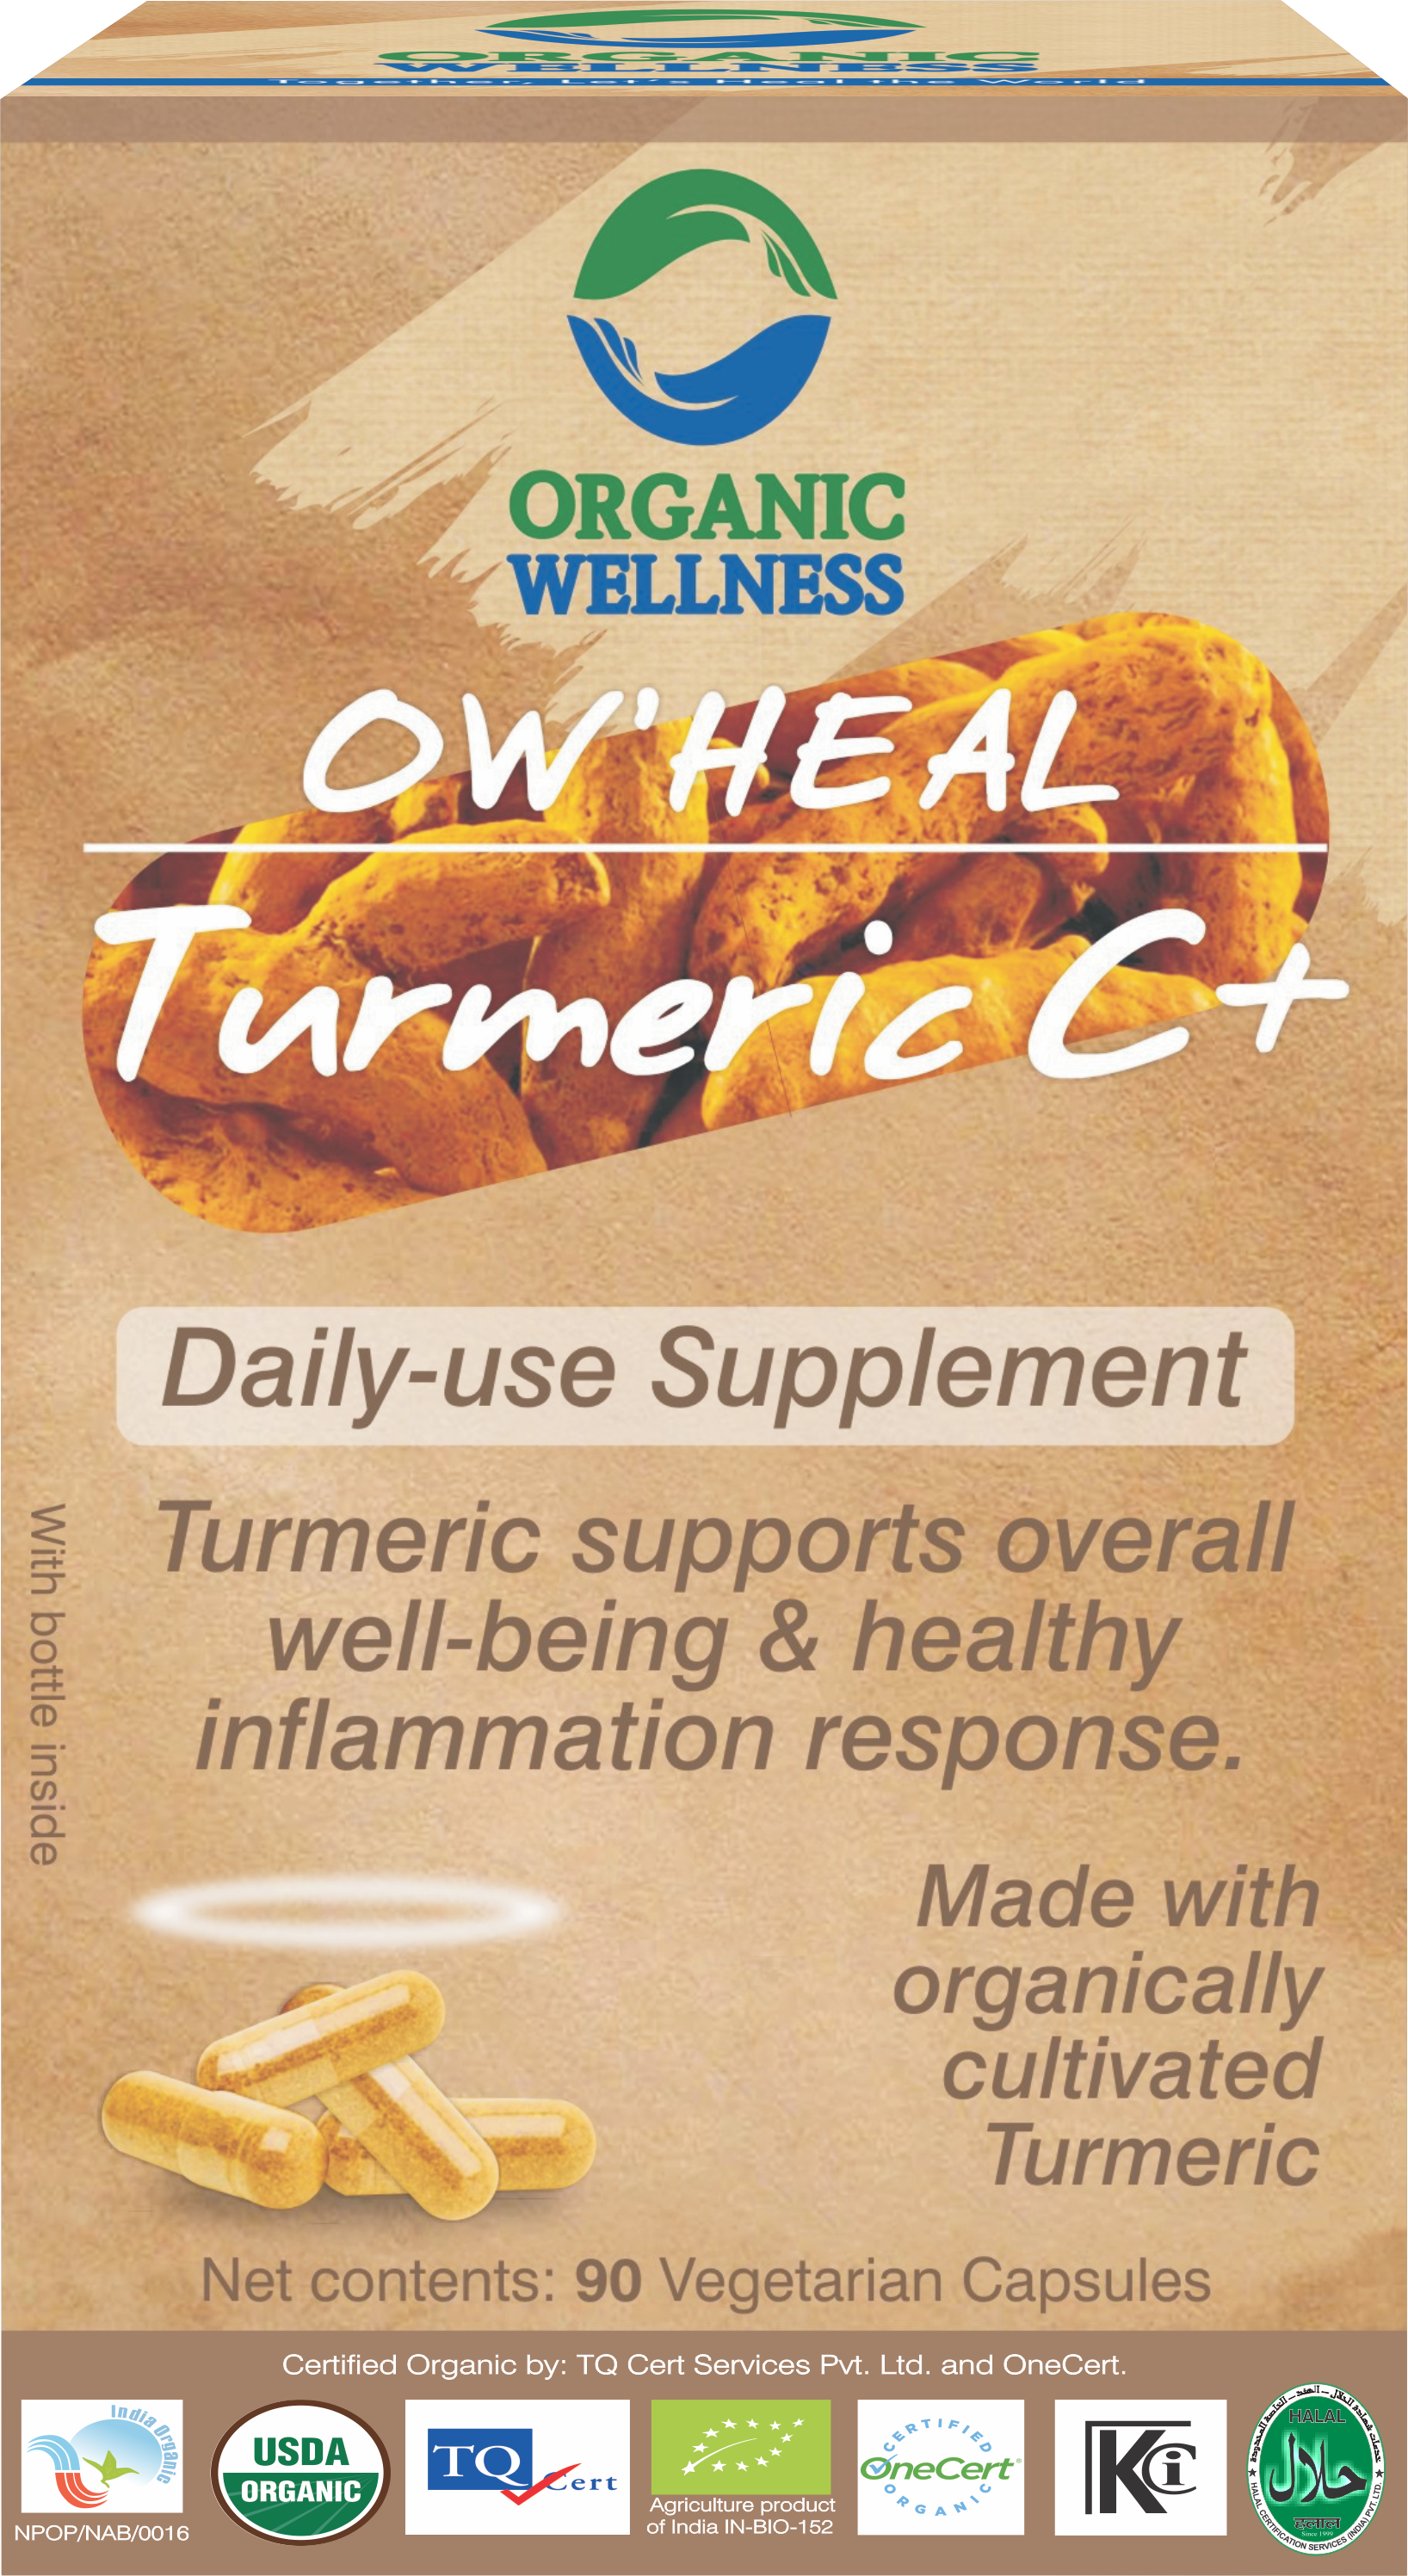 Buy Organic Wellness Heal Turmeric C Plus Capsule at Best Price Online